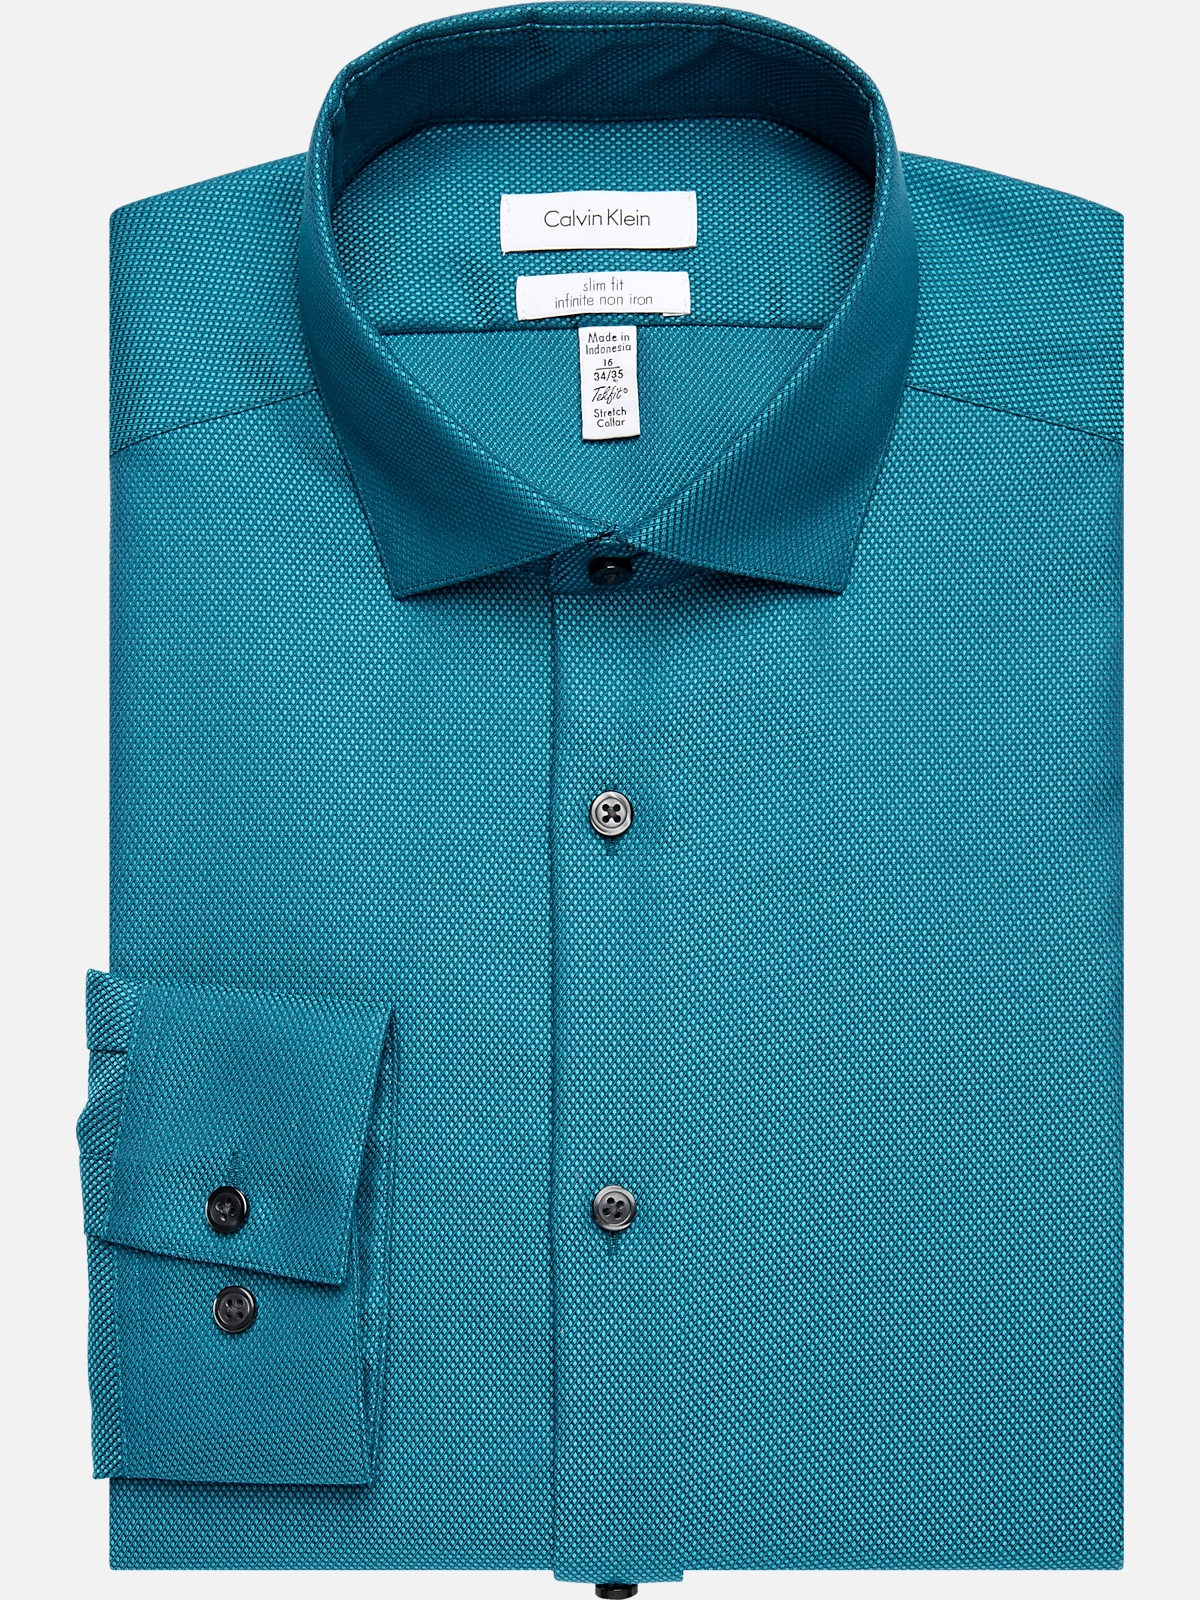 Calvin Klein Slim Fit Shirt | Shirts| Men\'s Dress Clearance Dress Wearhouse